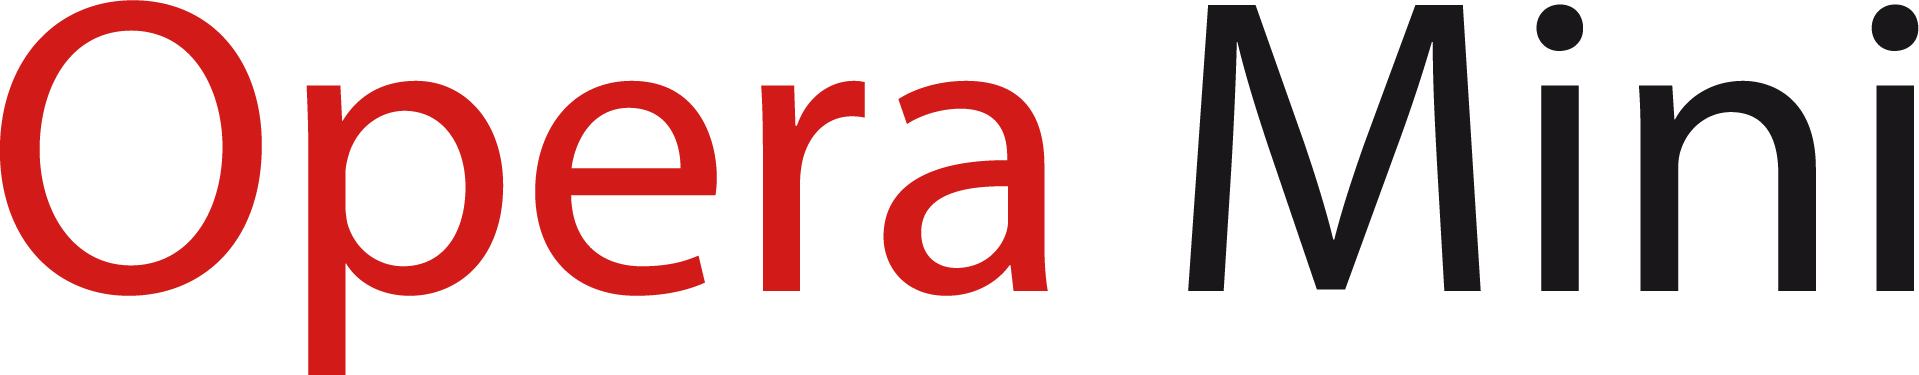 Opera Logo Transparent Images